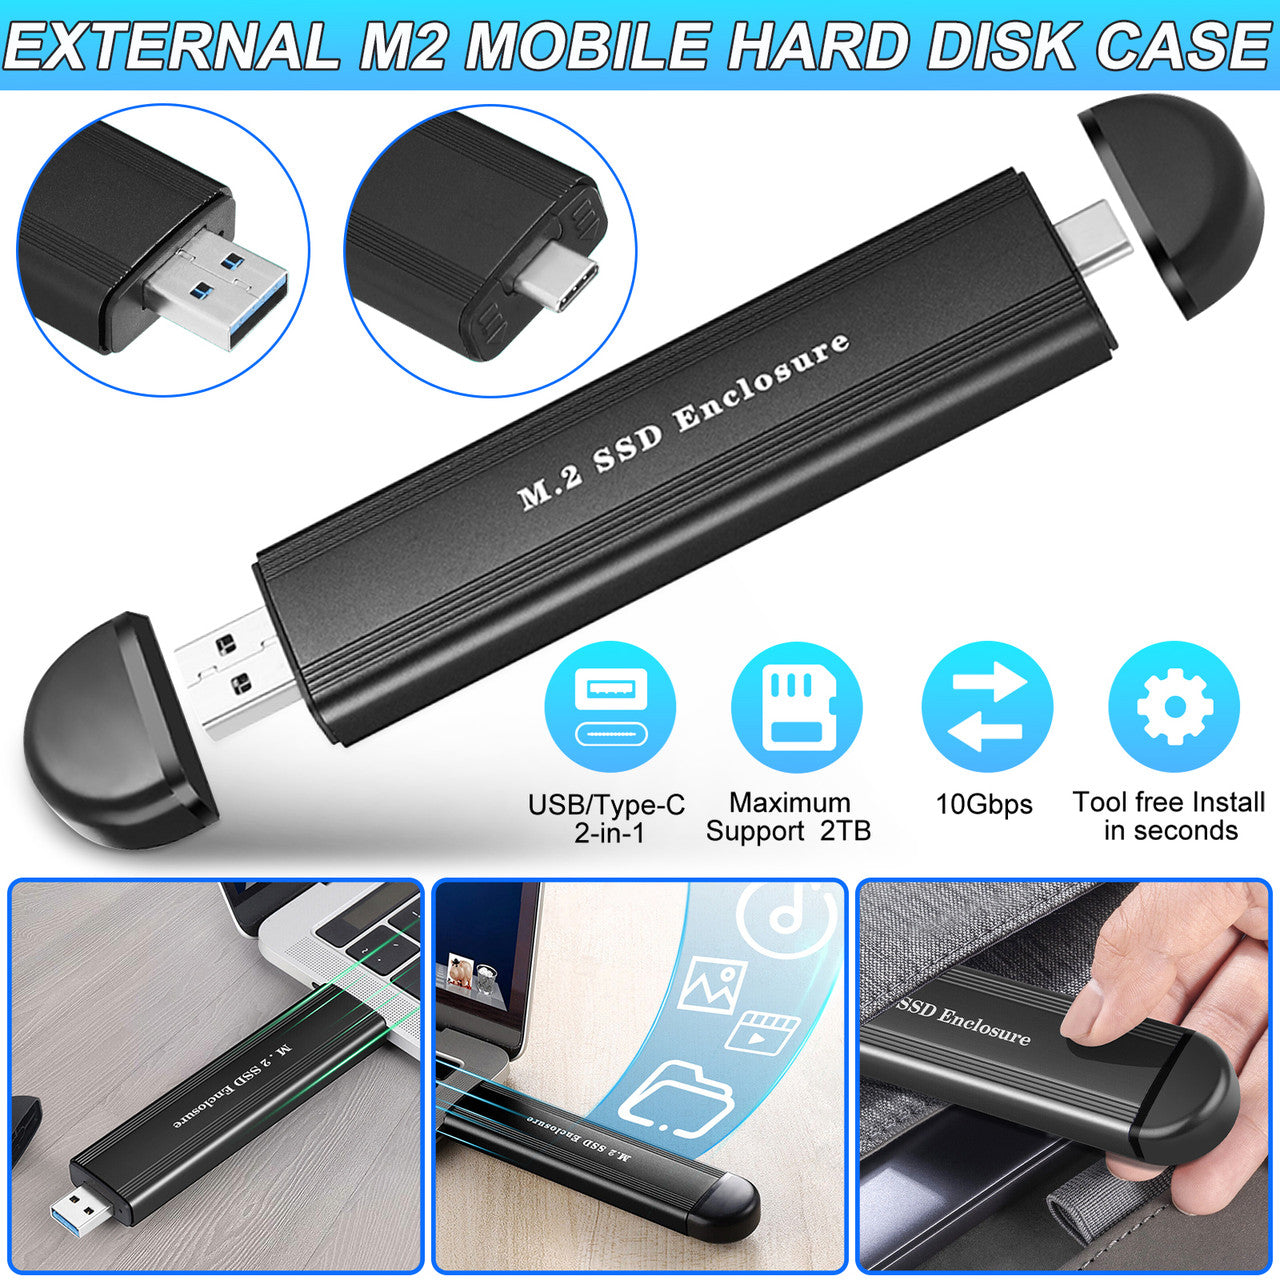 M.2 Ngff / Nvme Sata SSD to USB 3.2 External Case Hard Drive Enclosure - External Sata Based M.2 Solid State Drive Enclosure Reader (For M.2 Sata SSD Only)